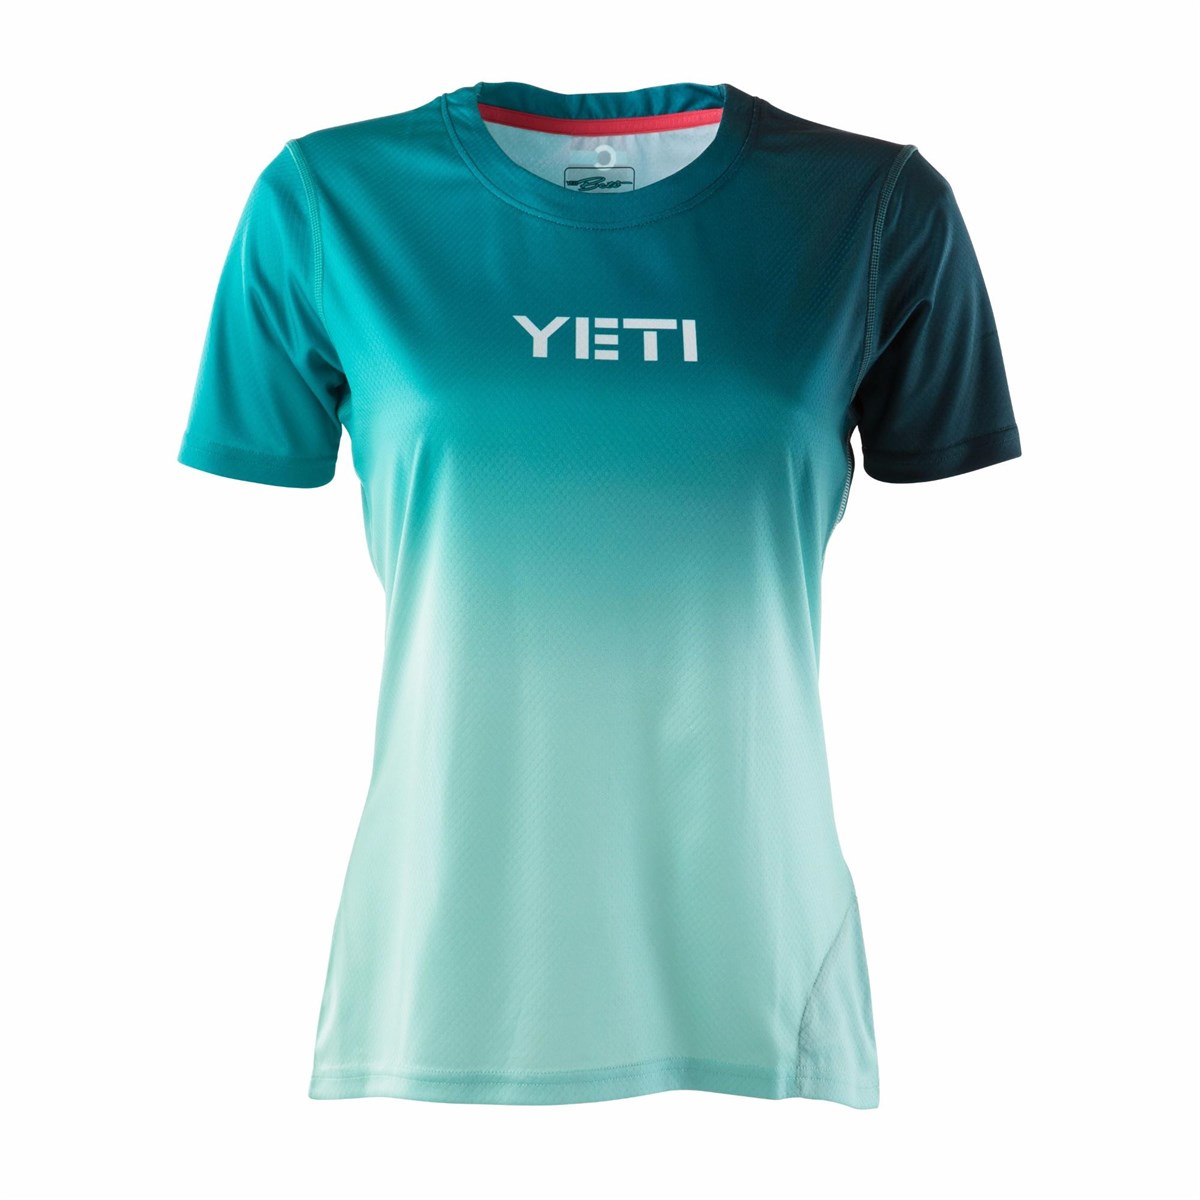 Yeti Monarch Short Sleeve Jersey product image